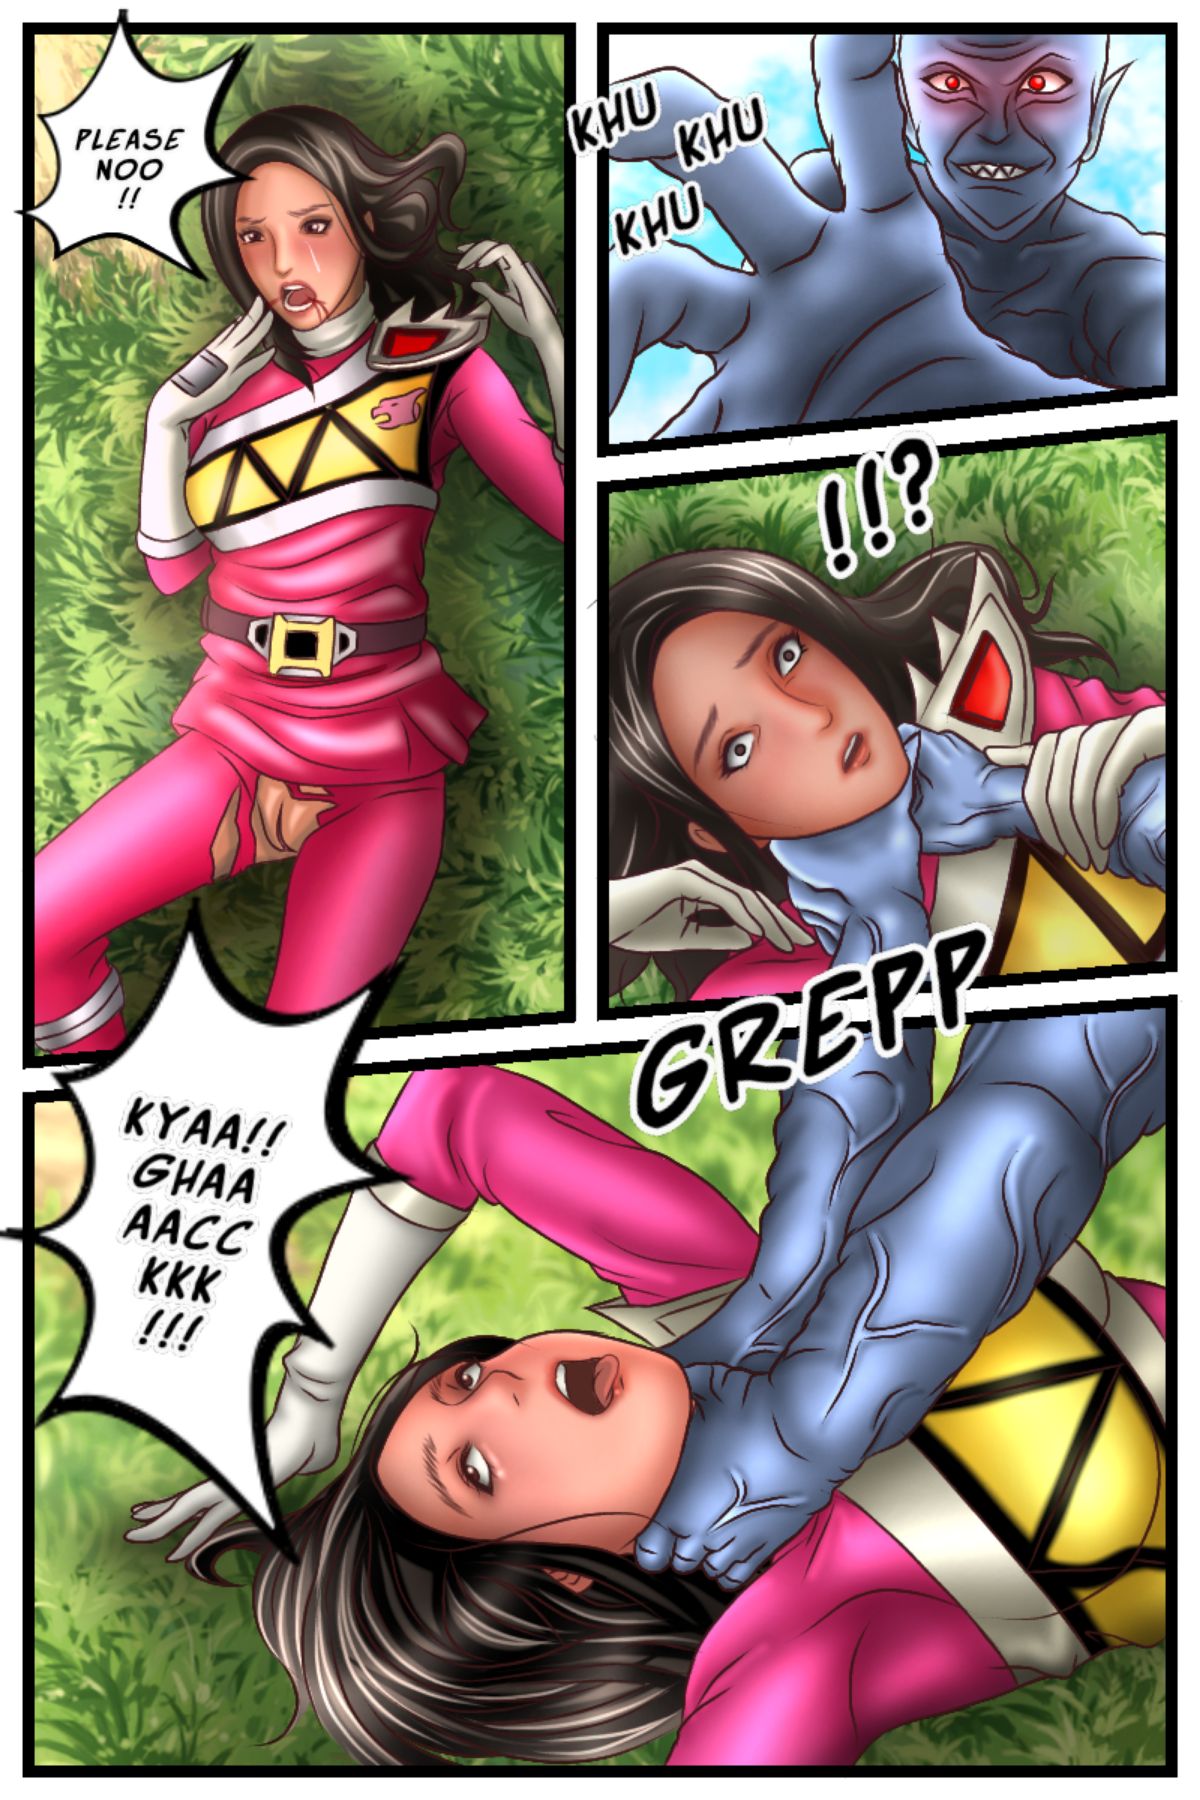 Power Rangers Hentai - Power Rangers Snuff Comic - Page 2 - HentaiEra